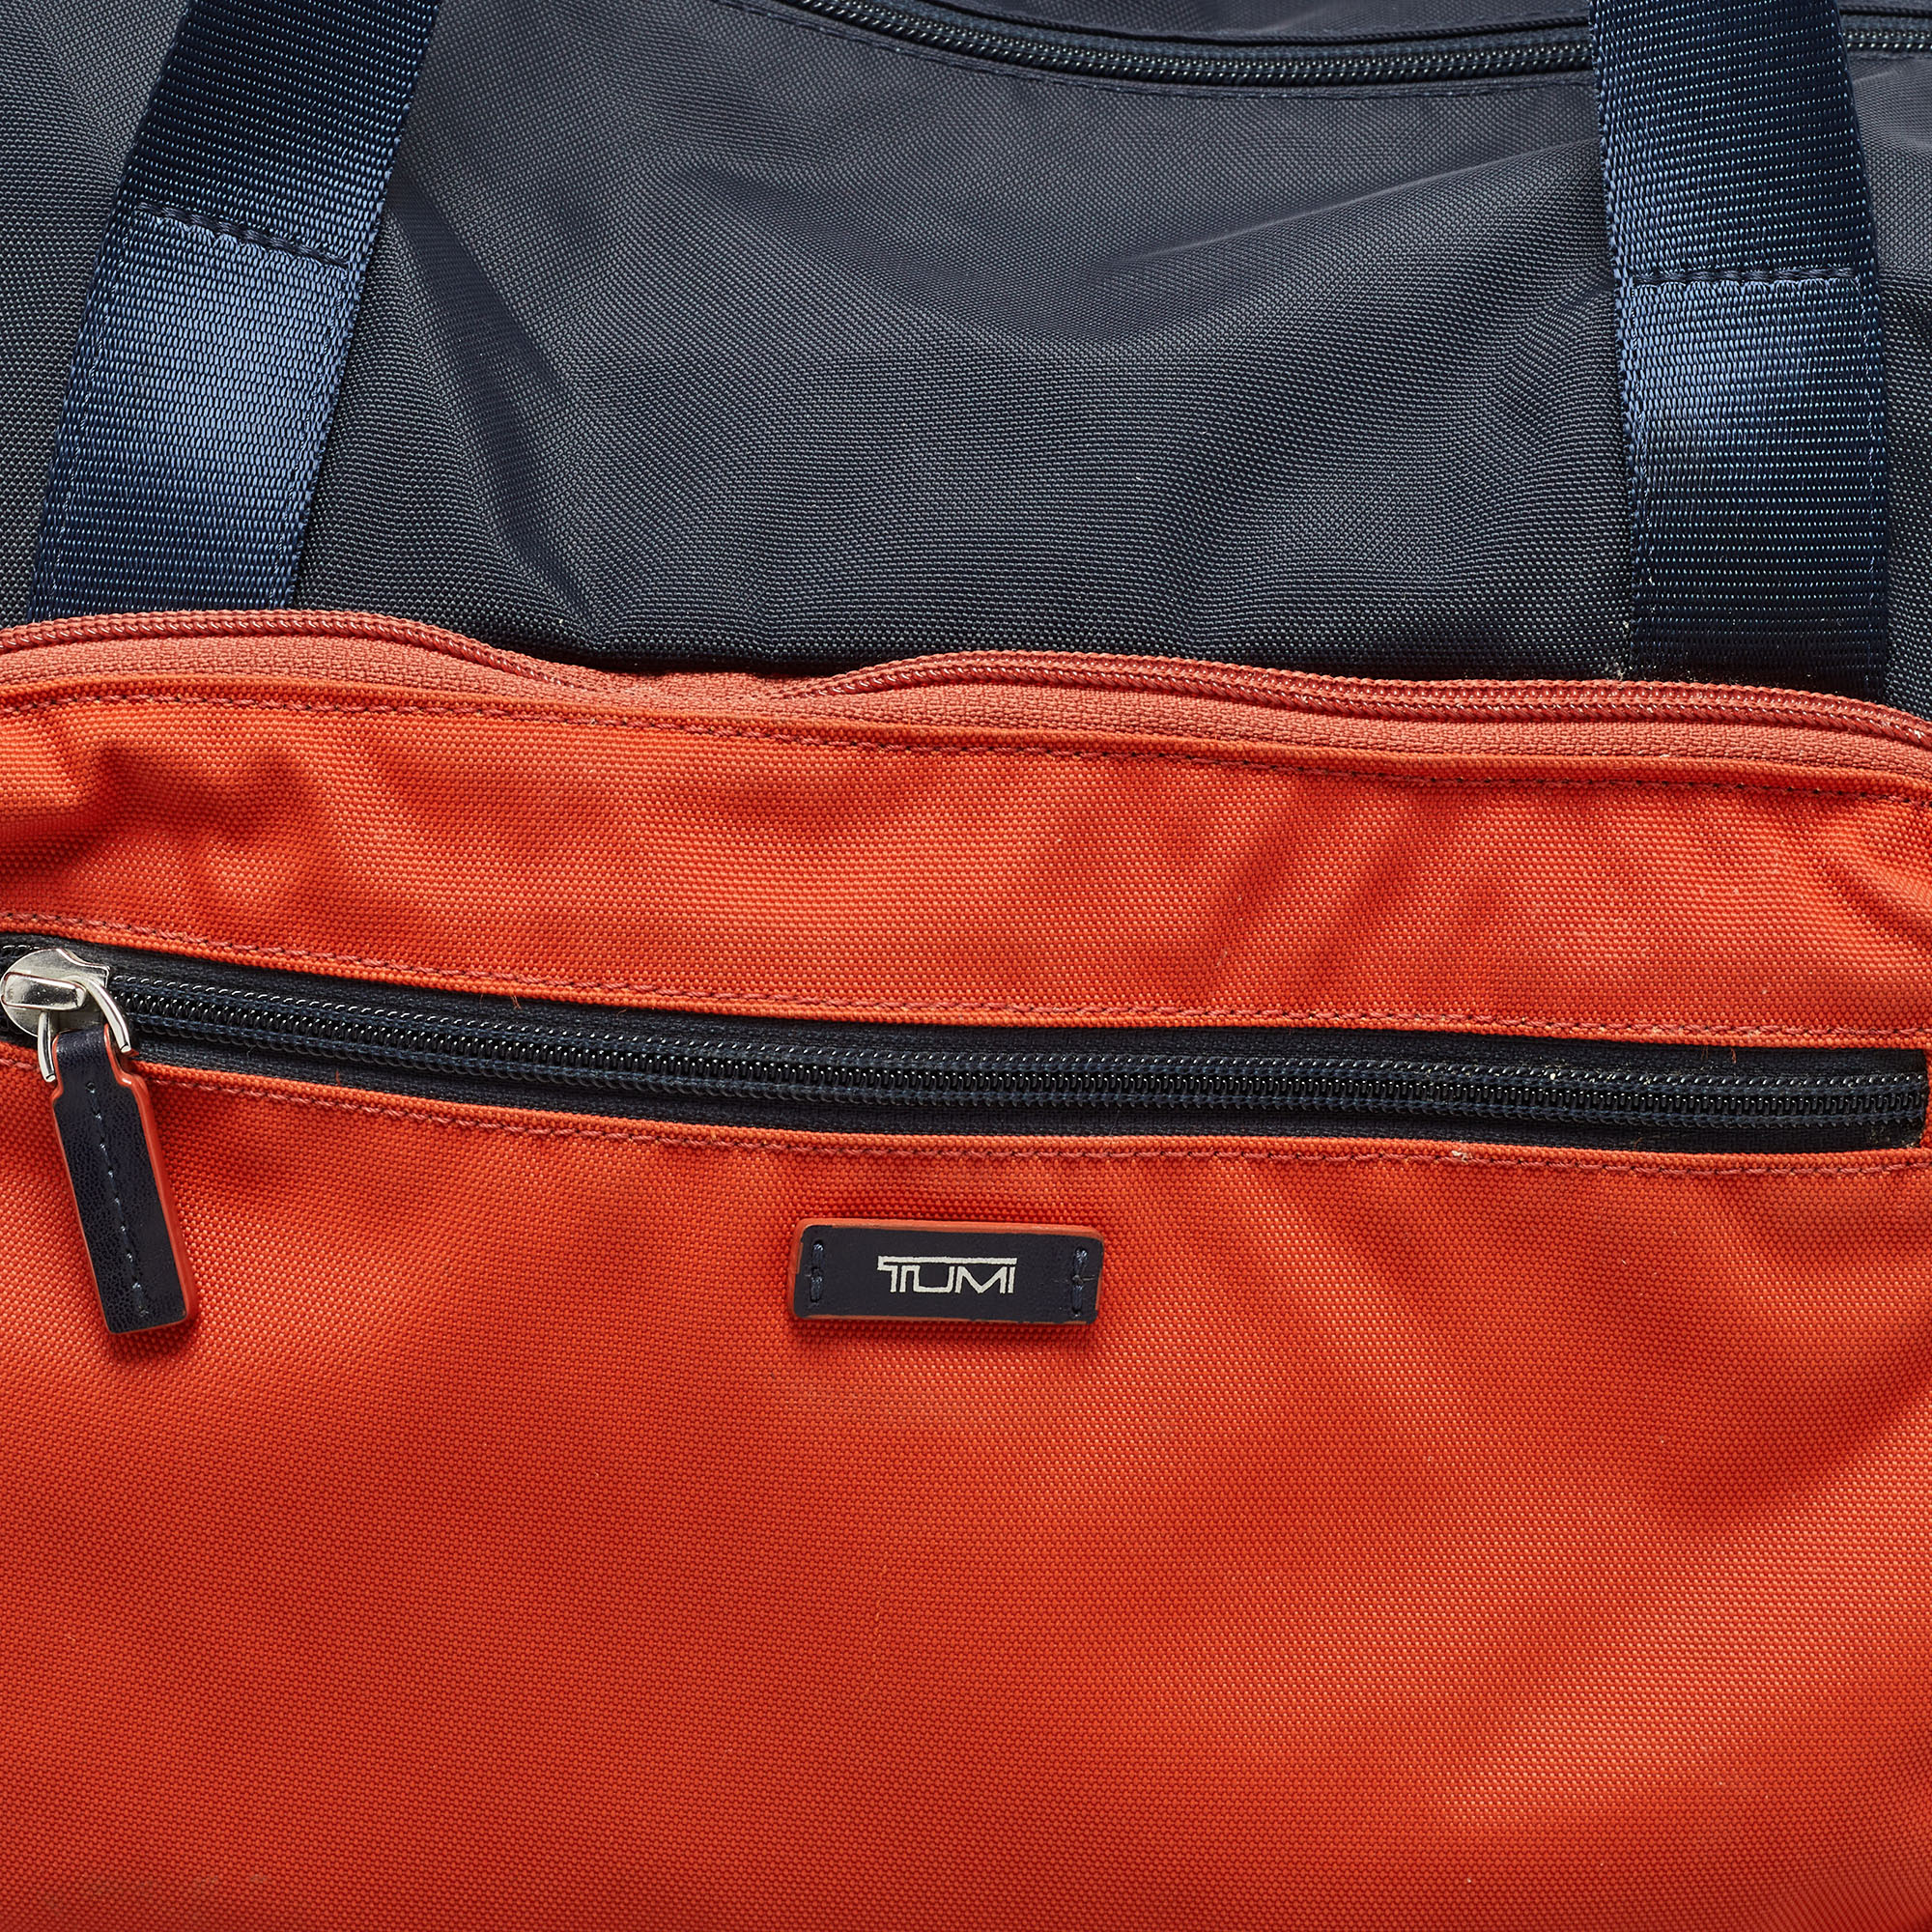 TUMI Navy Blue/Orange Nylon Foldable Compact Duffle Bag